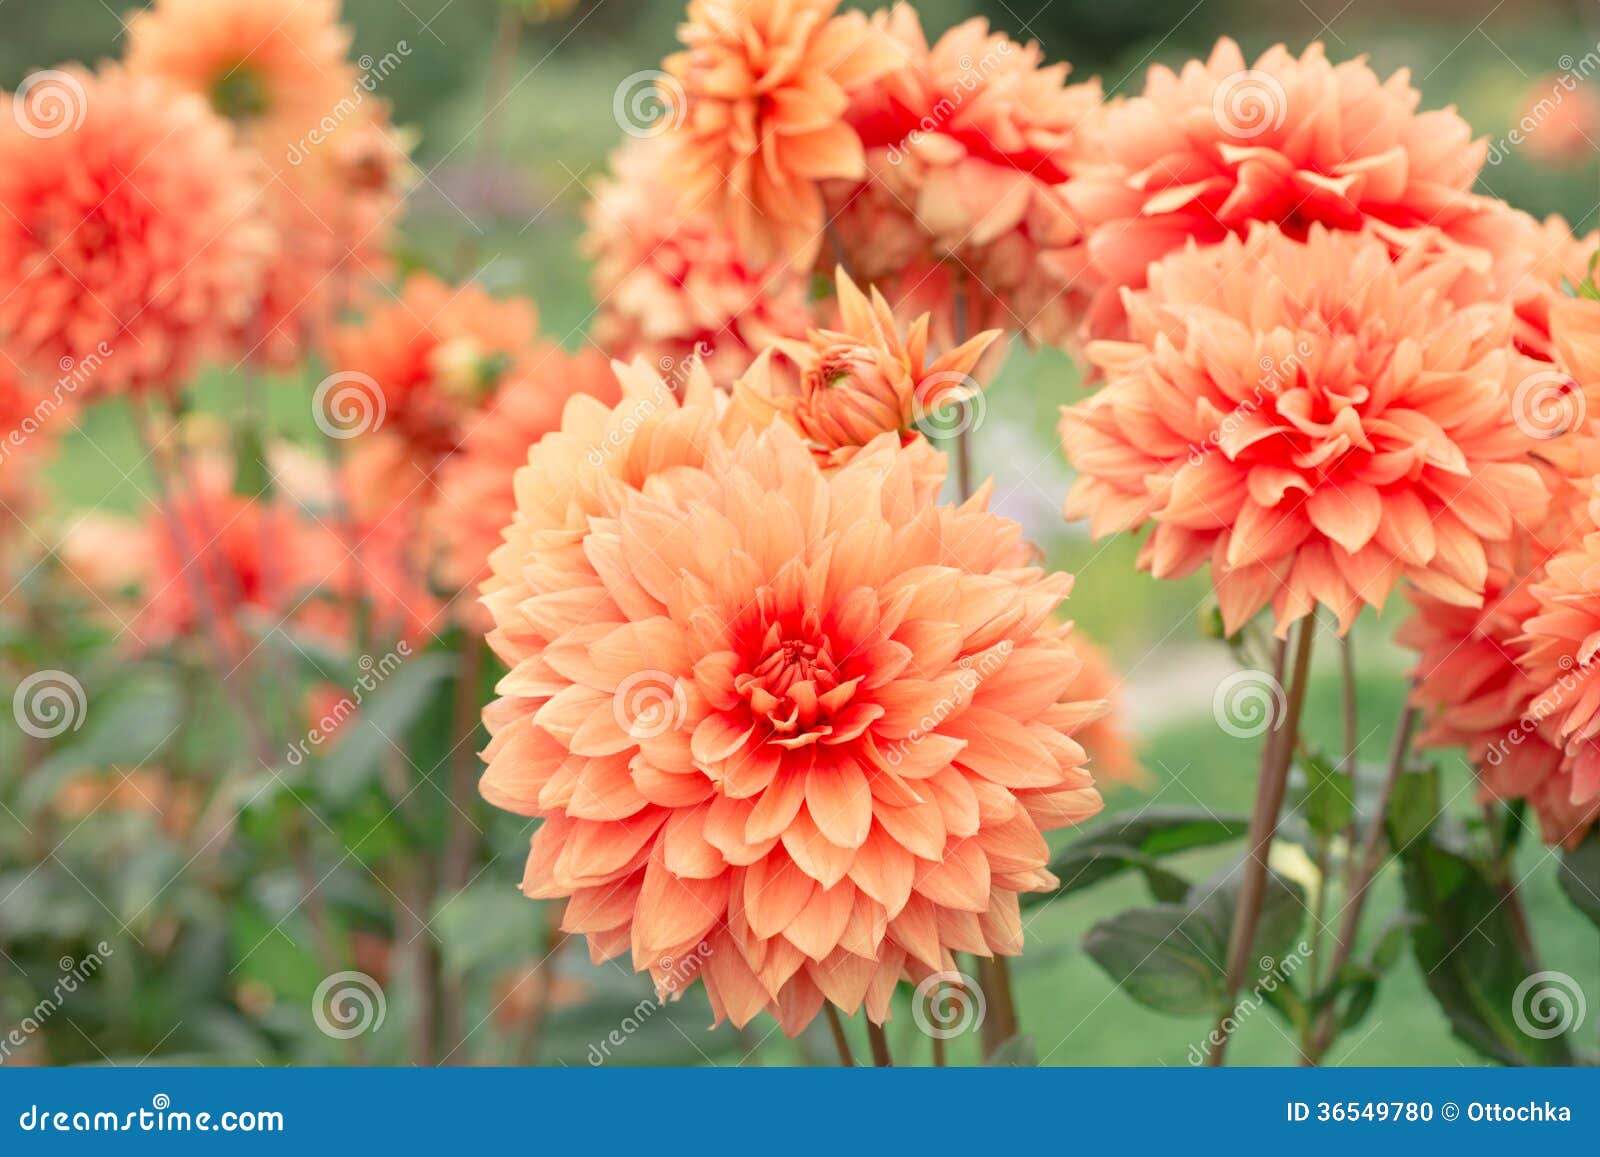 flowers dahlias